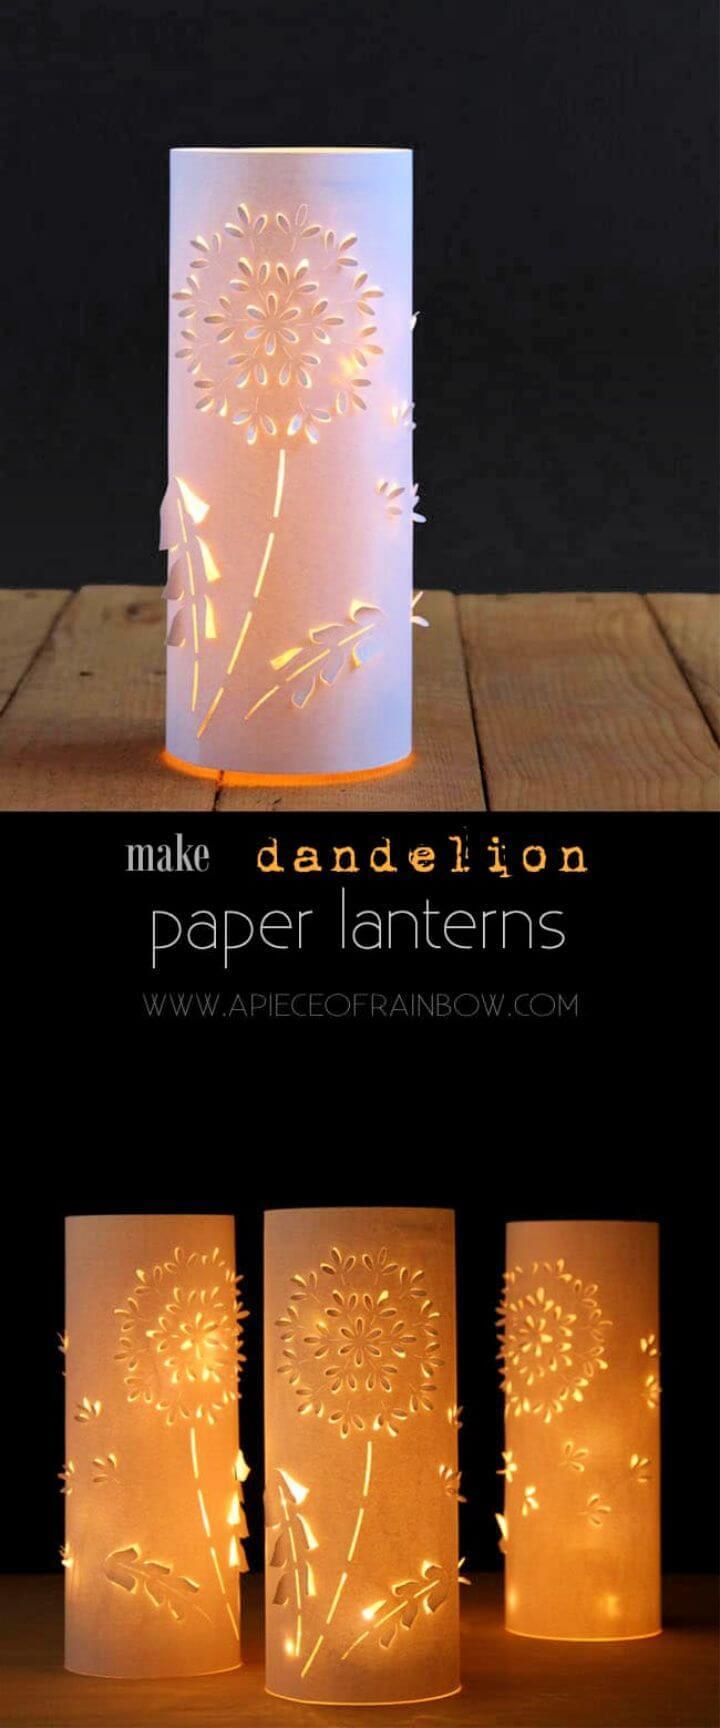 Make Paper Lanterns Inspired by Dandelions